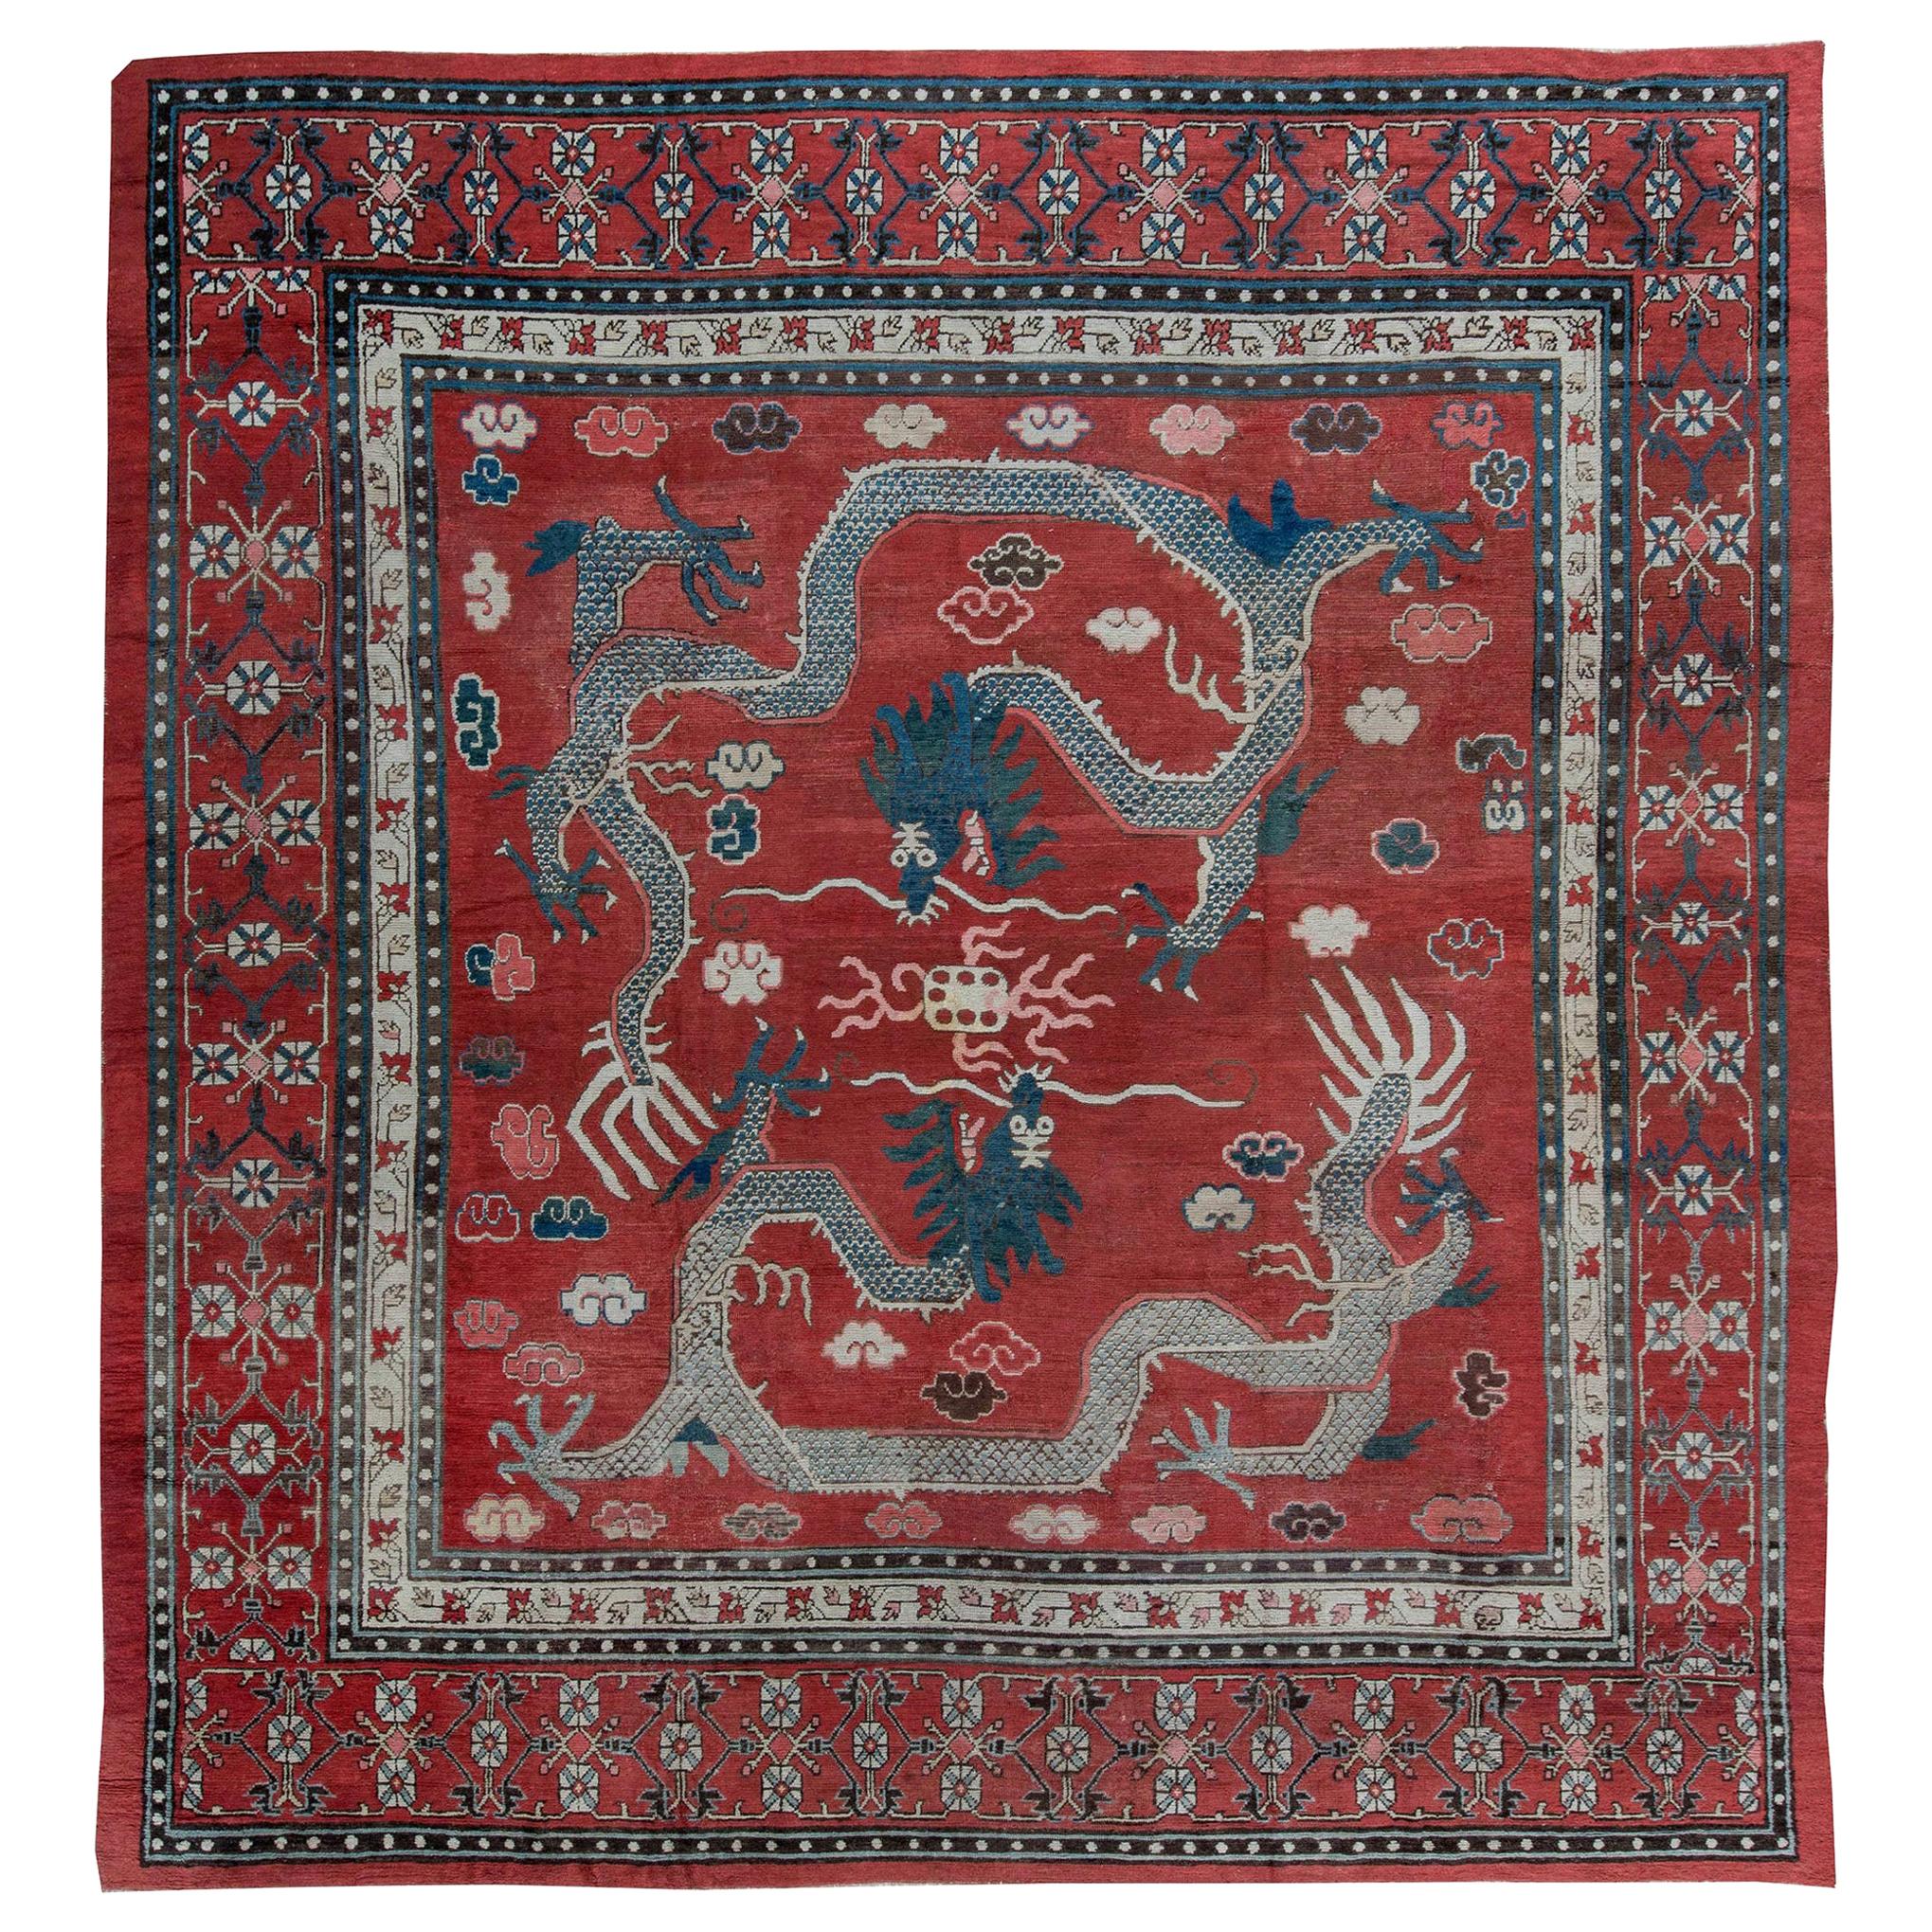 Early 20th Century Samarkand Dragon Carpet